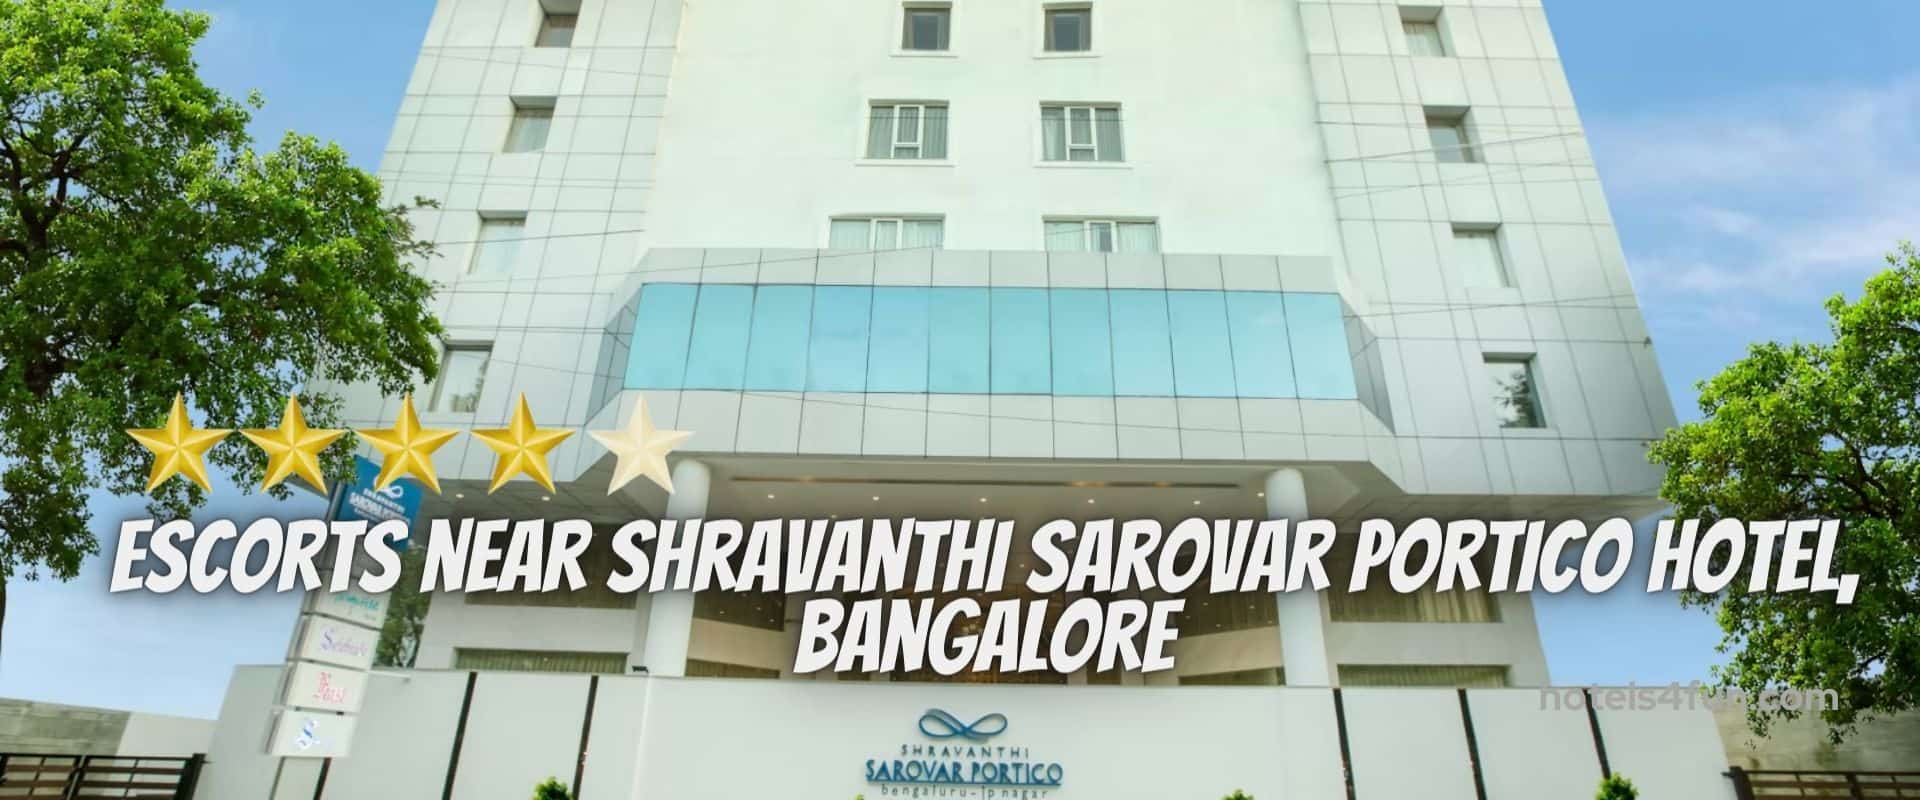 Shravanthi Sarovar Portico Hotel Bangalore